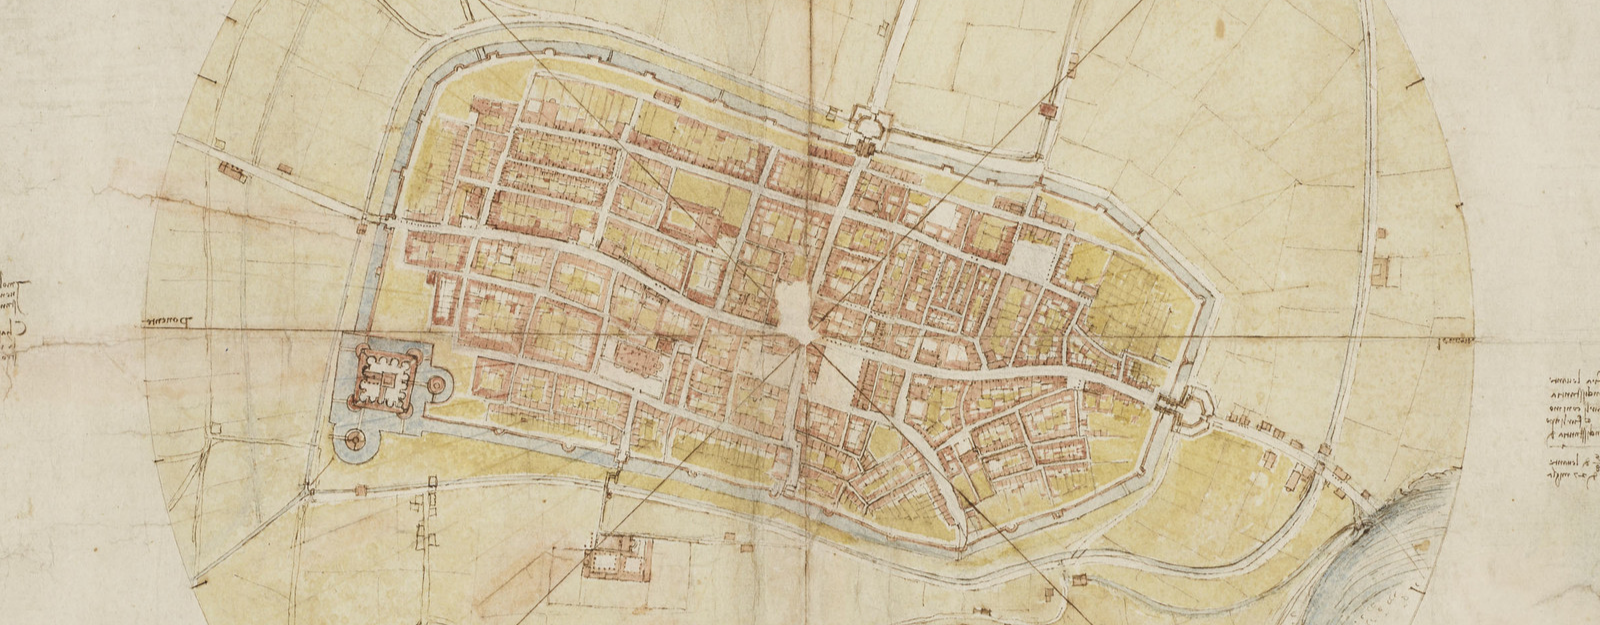 A map of Imola by Leonardo da Vinci